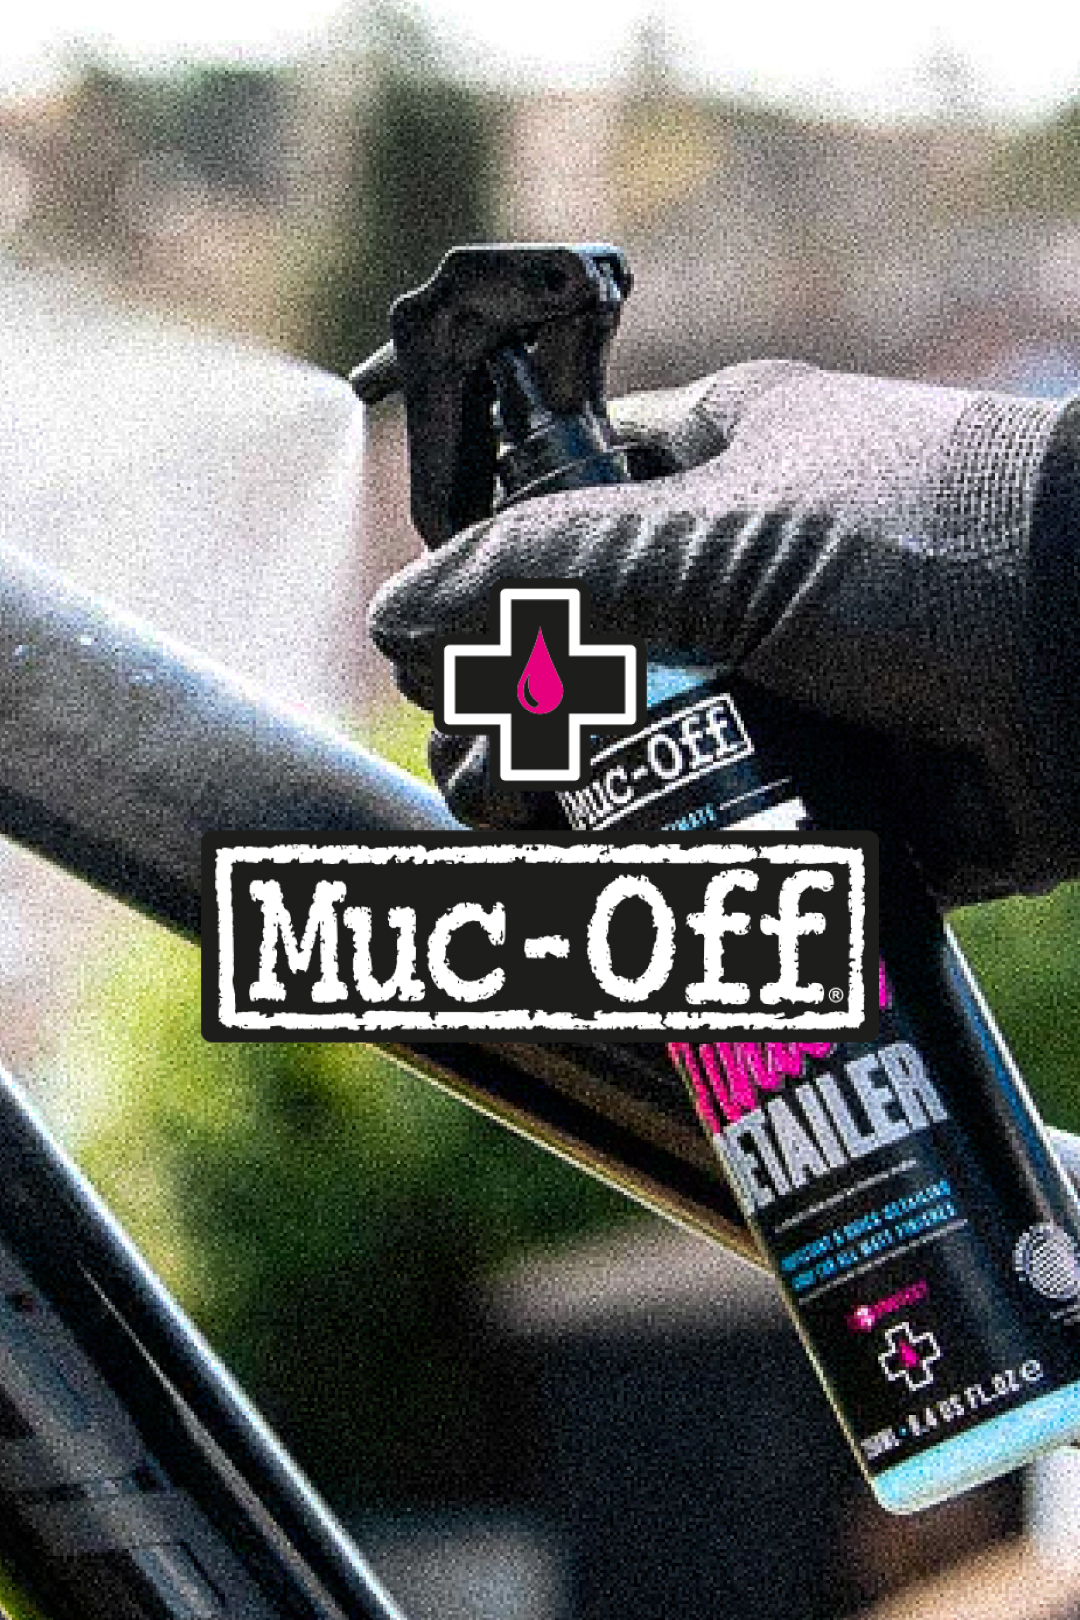 Hand in a glove applying Muc-Off lubricant to a bike chain, emphasizing bike maintenance @ Bici.